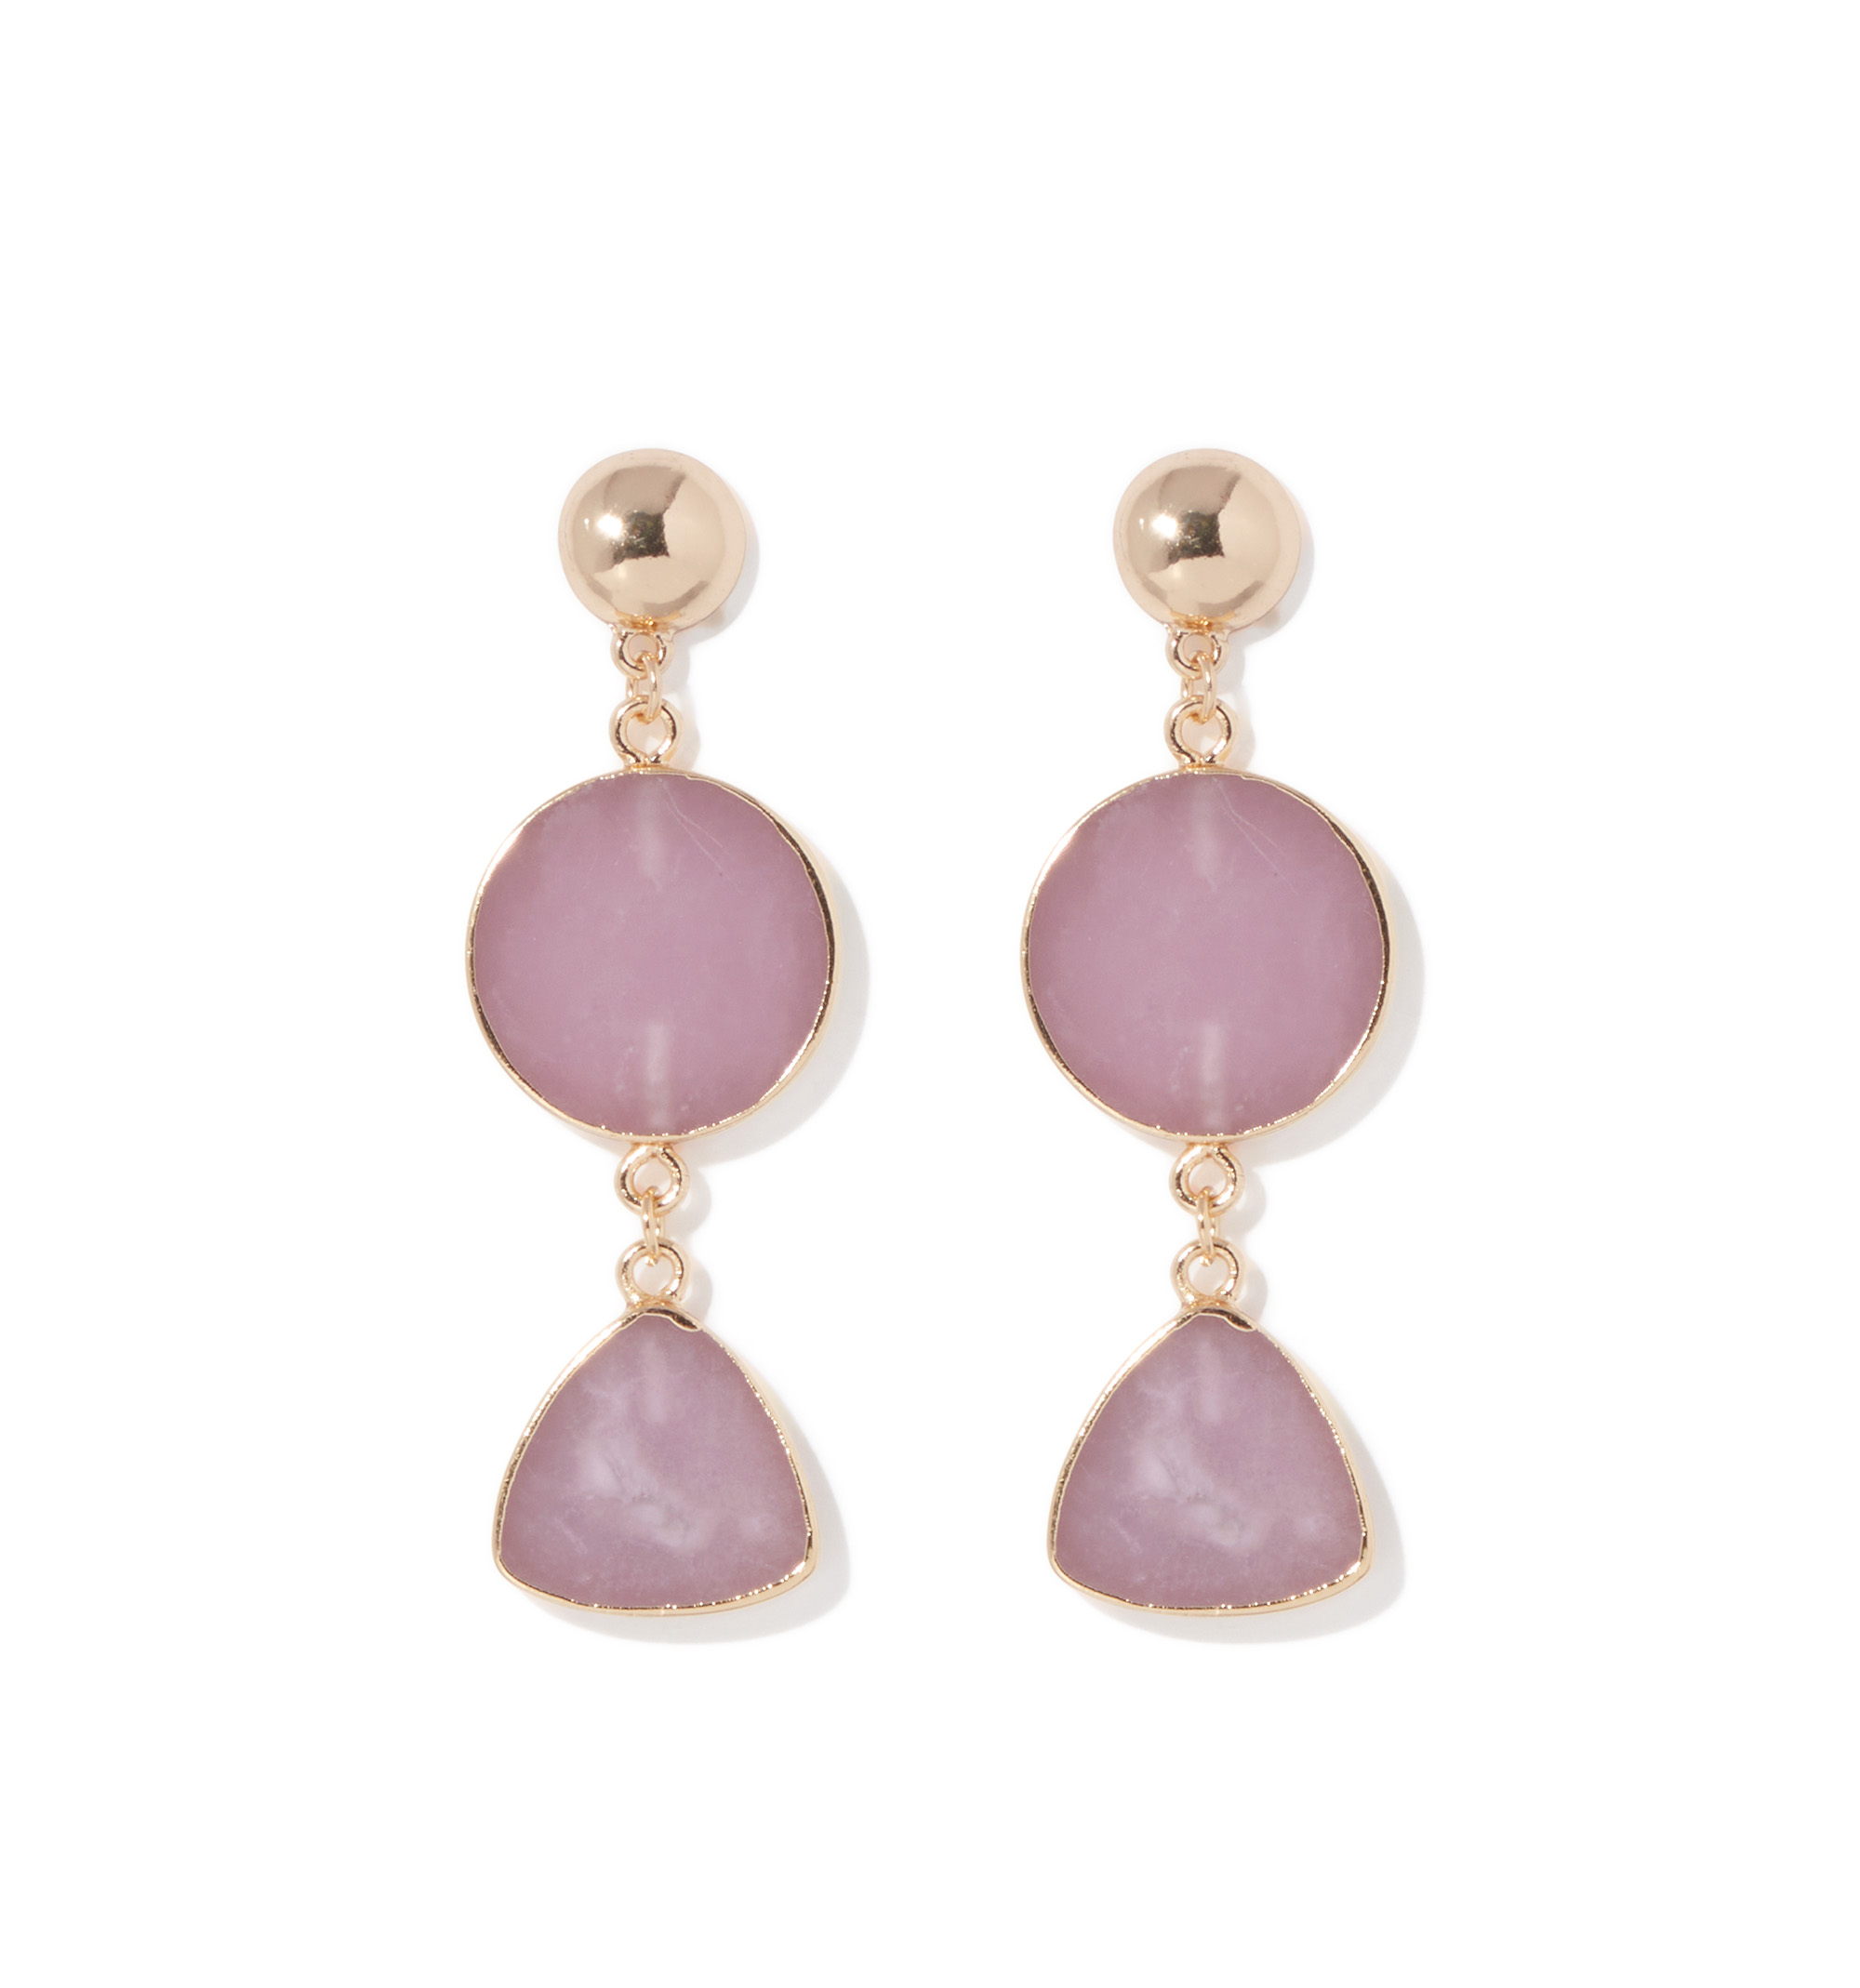 Kundan and Semi Precious Stone Earrings by Jade Bespoke – The Crescent Moon  Shop